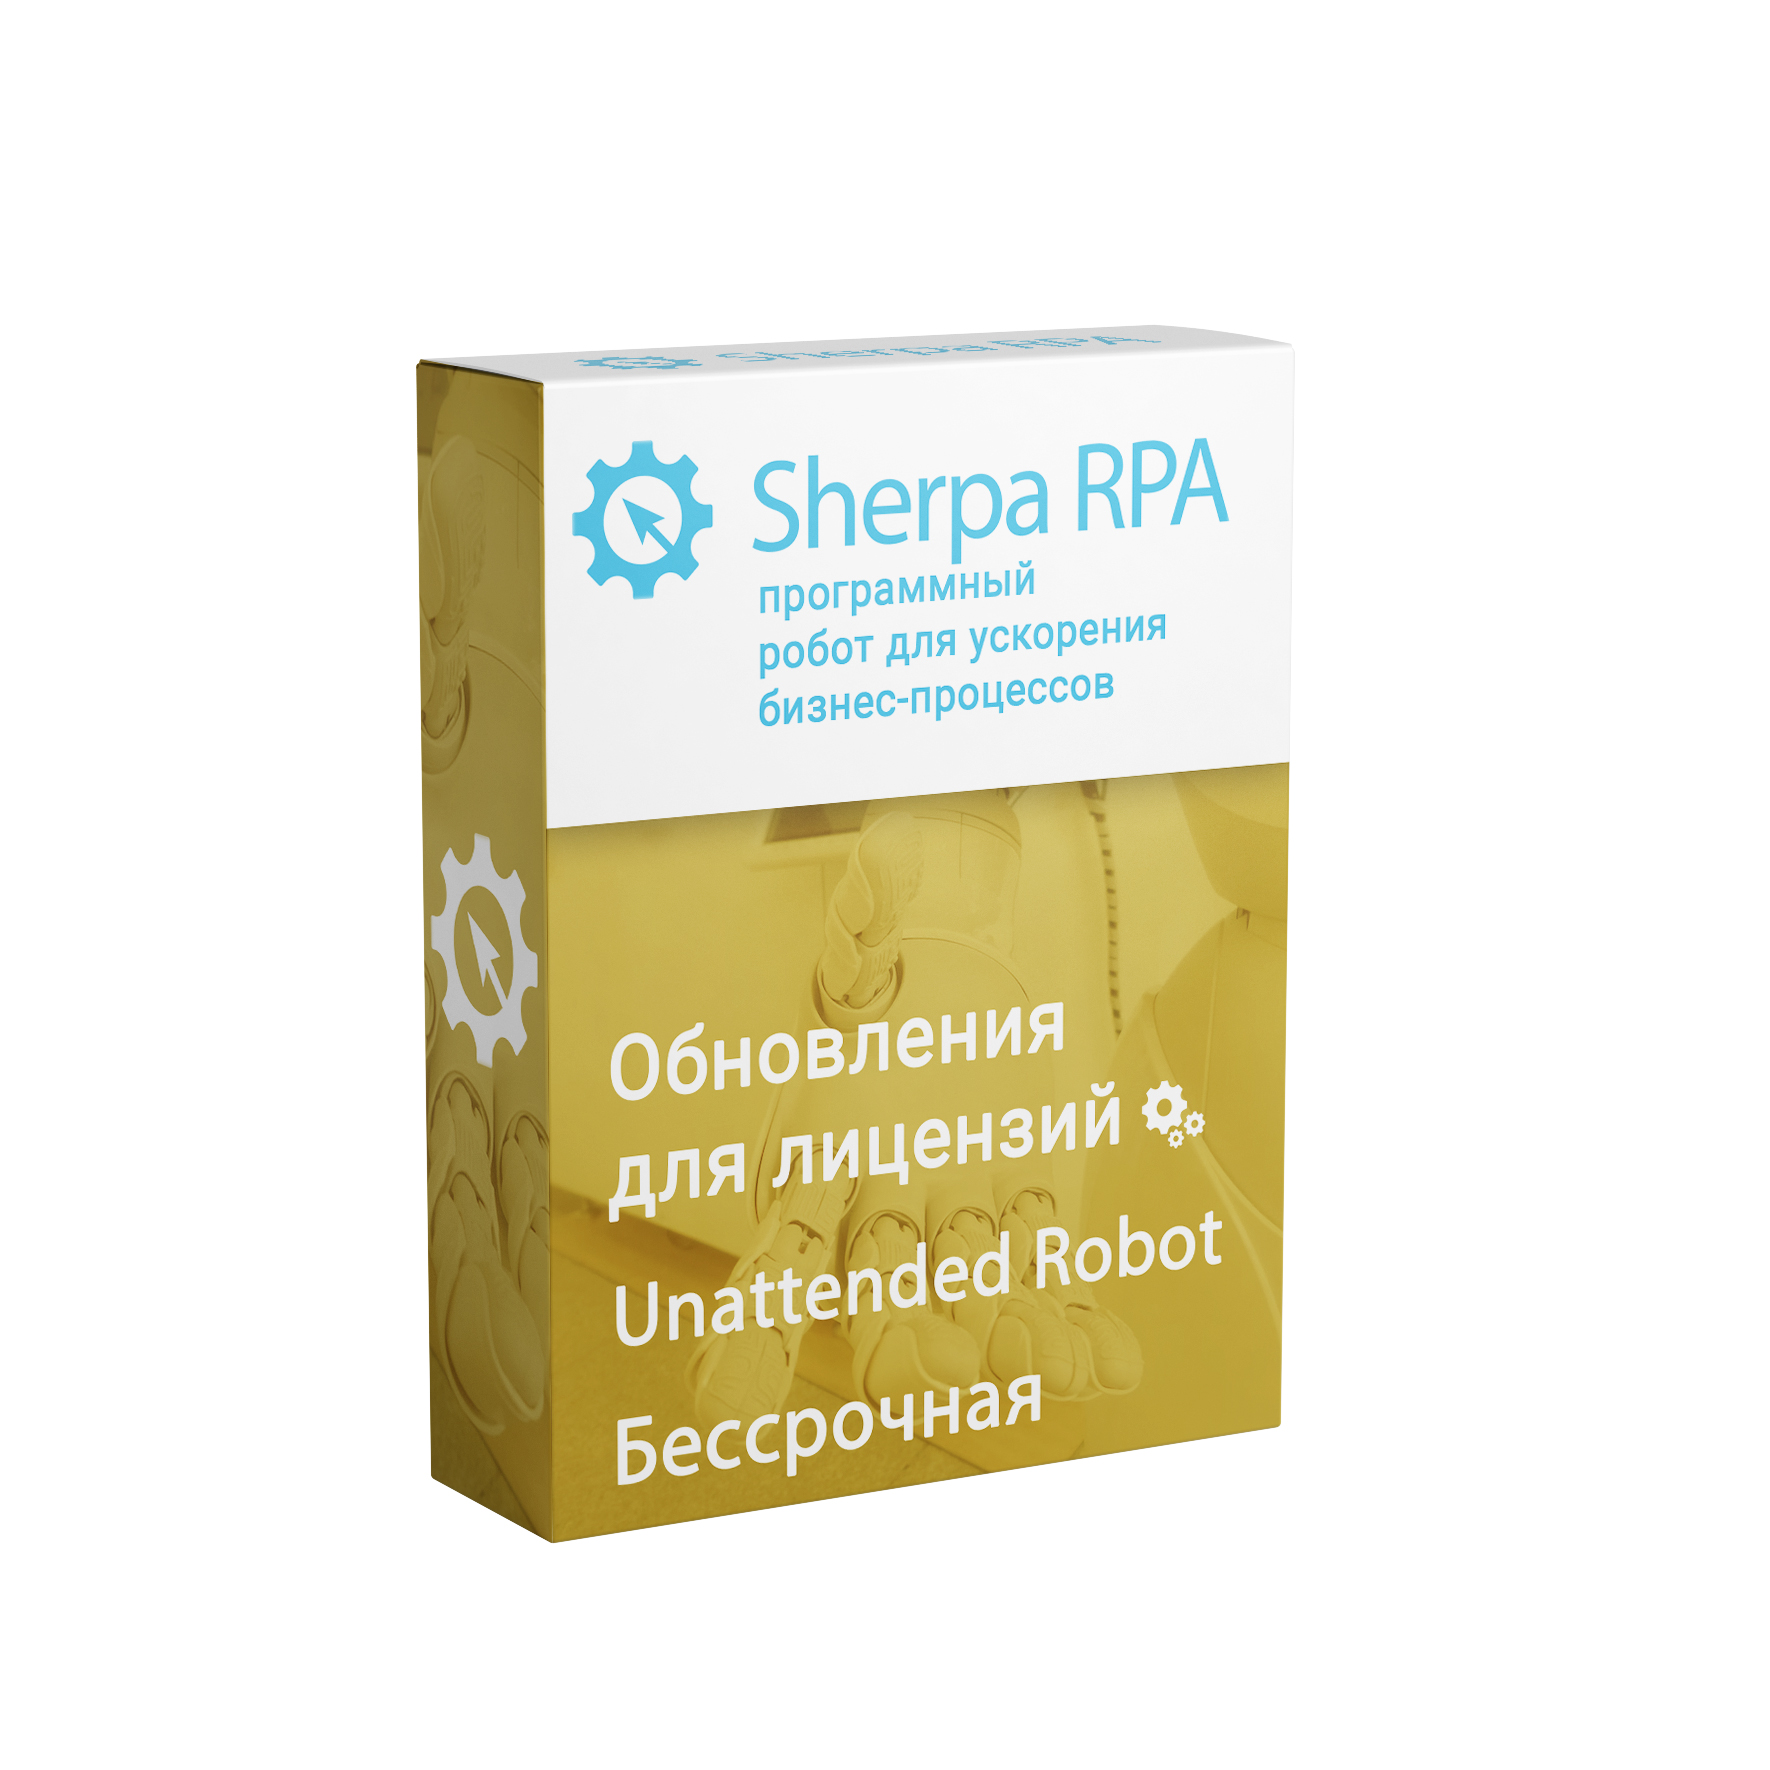 Sherpa RPA (Unattended Robot, Бессрочная)